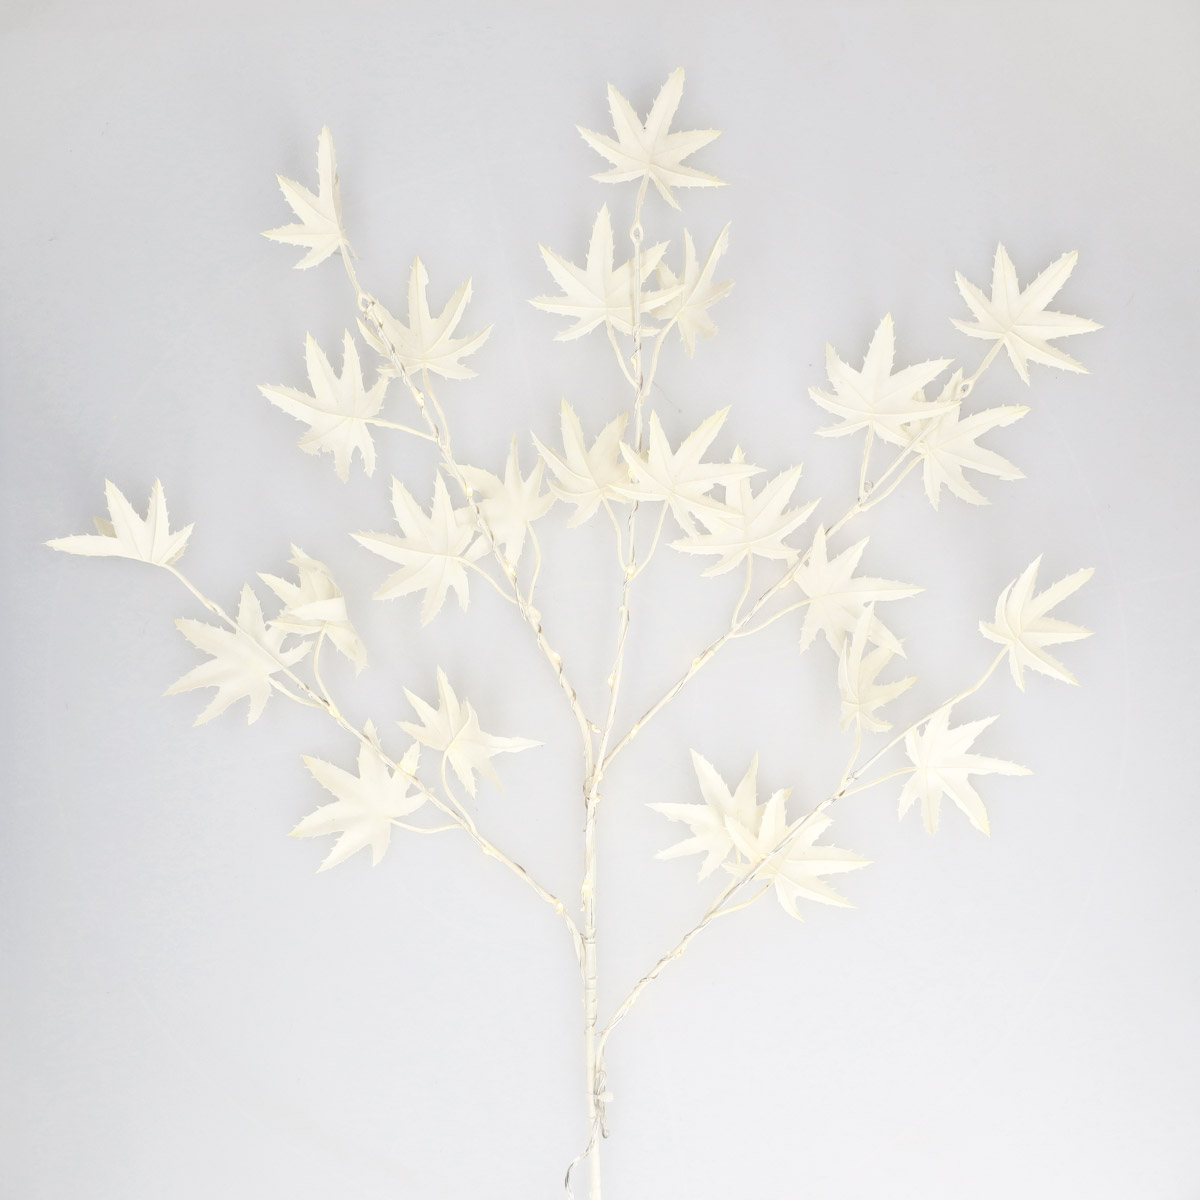 Rama decorativa LED de hojas de arce blancas 0,70M Luz cálida